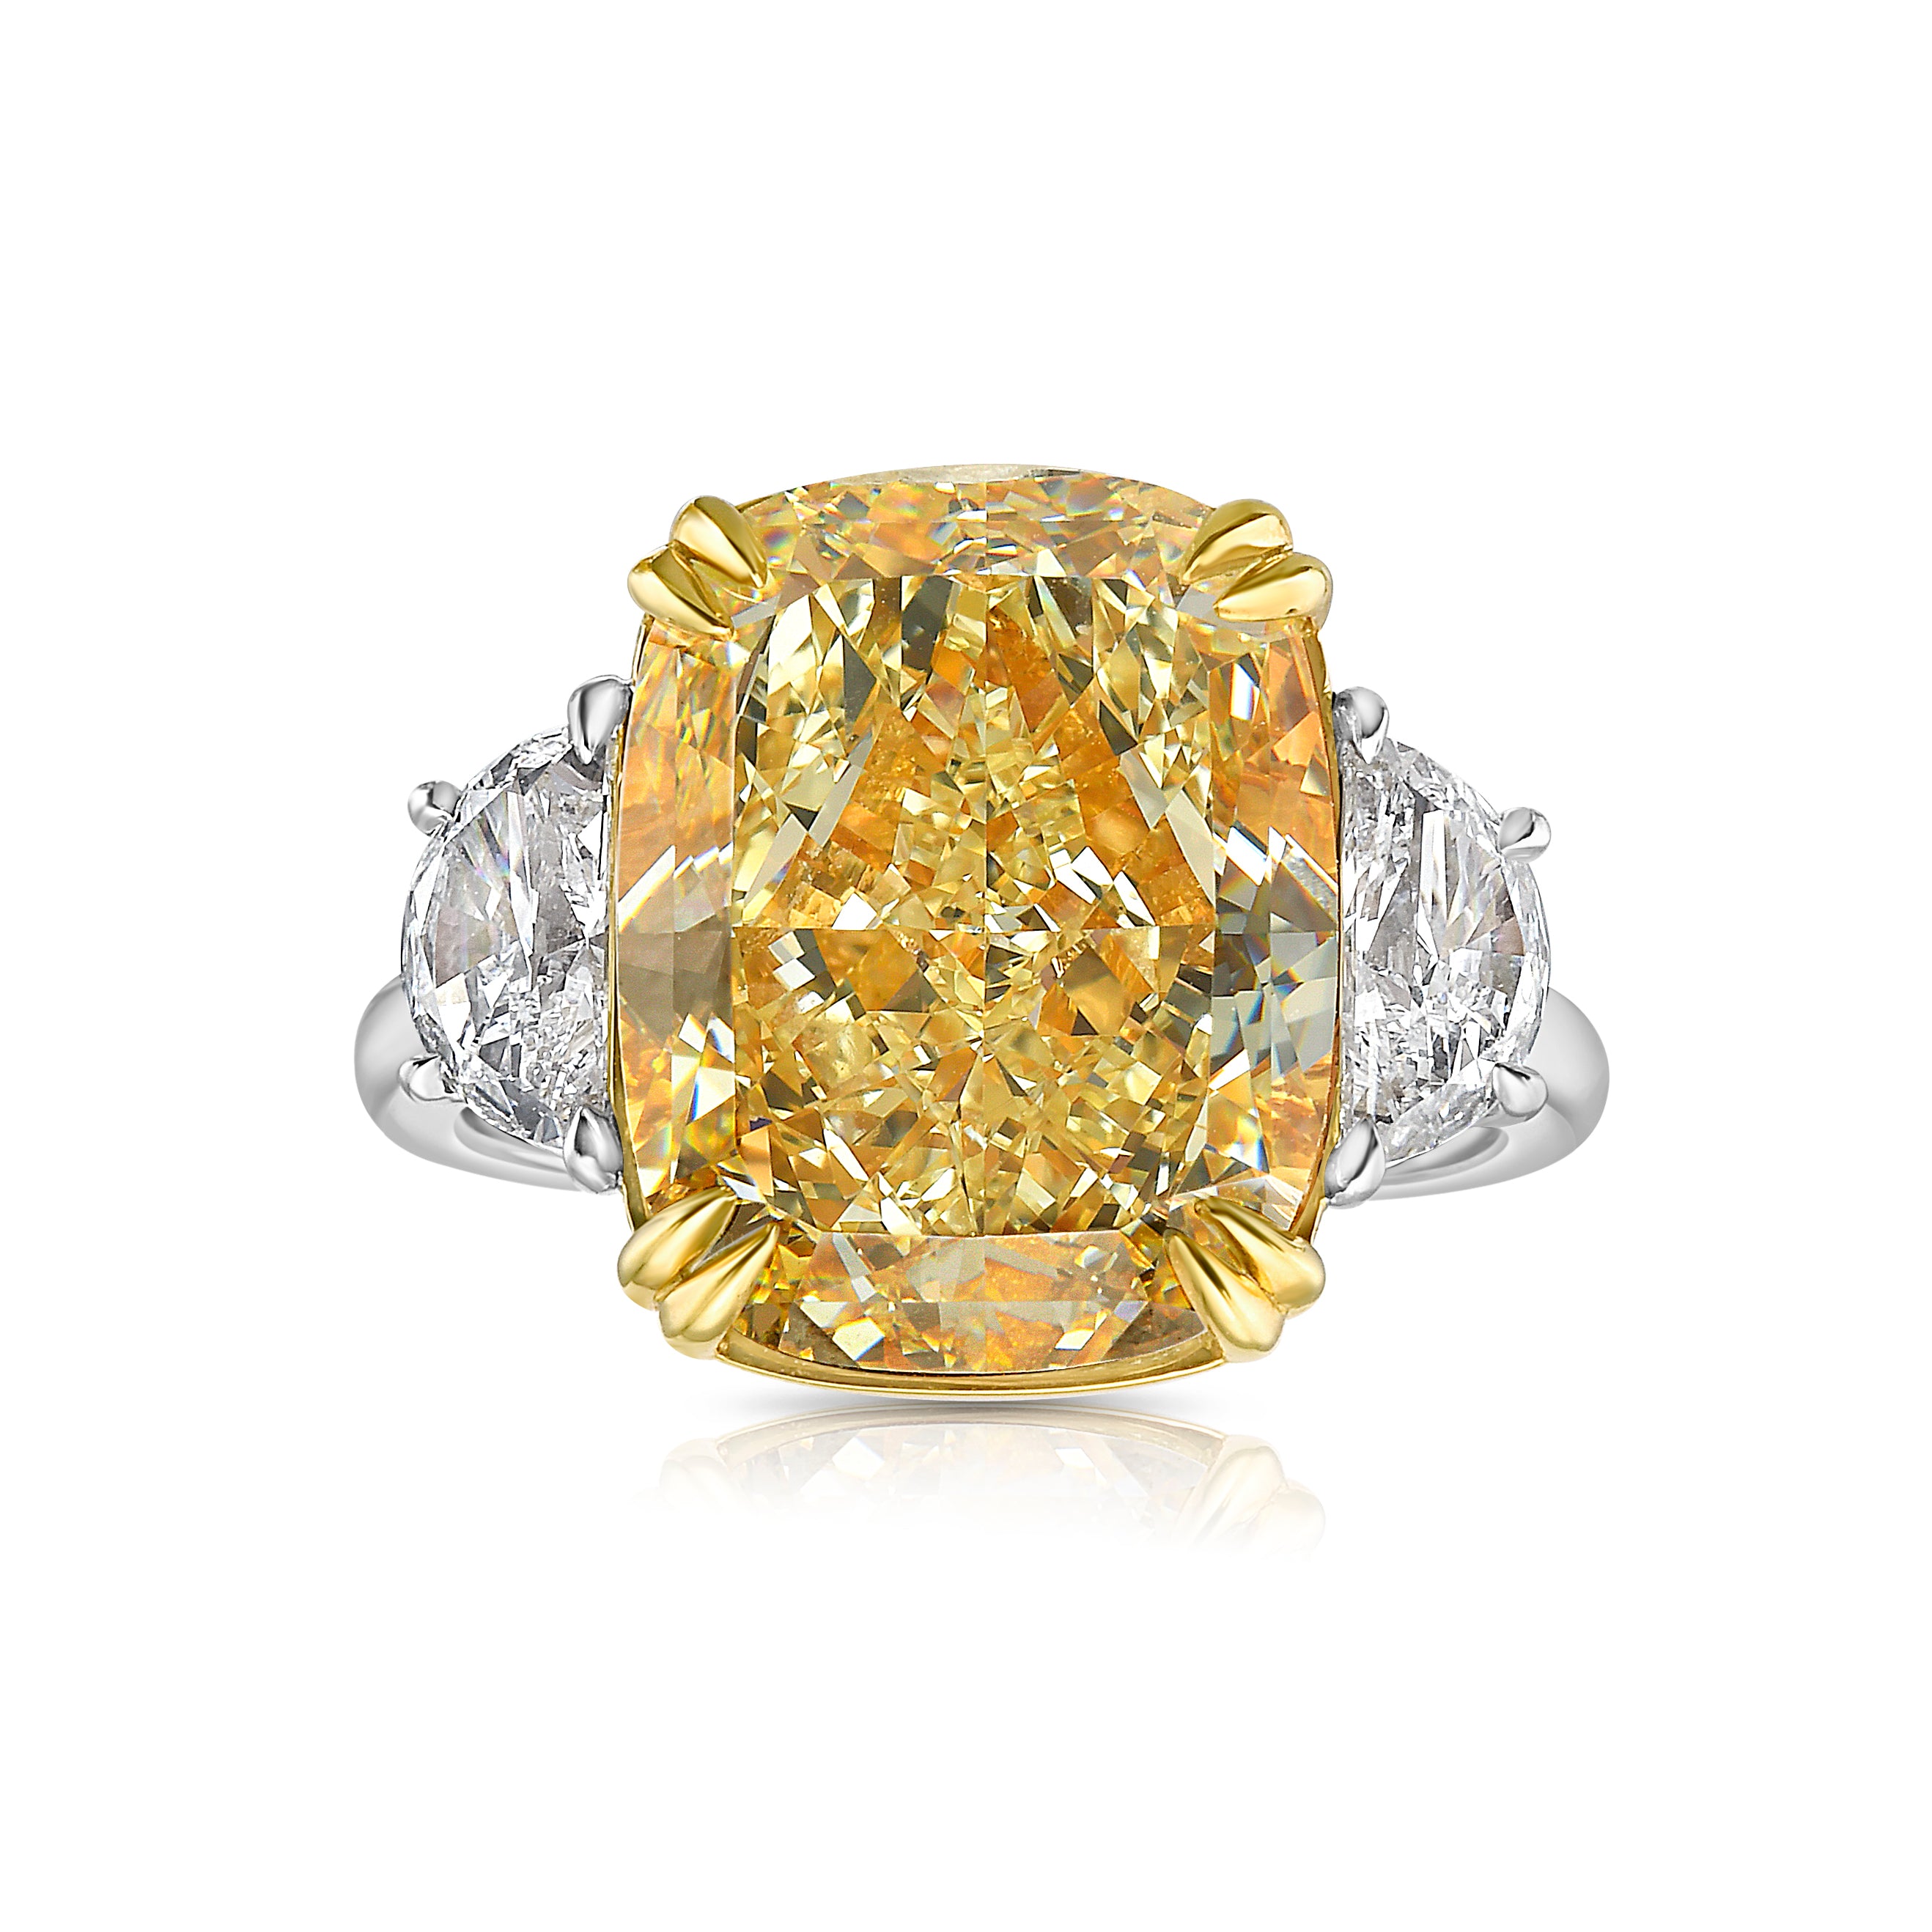 10ct Fancy Light Yellow Diamond Elongated Cushion Ring